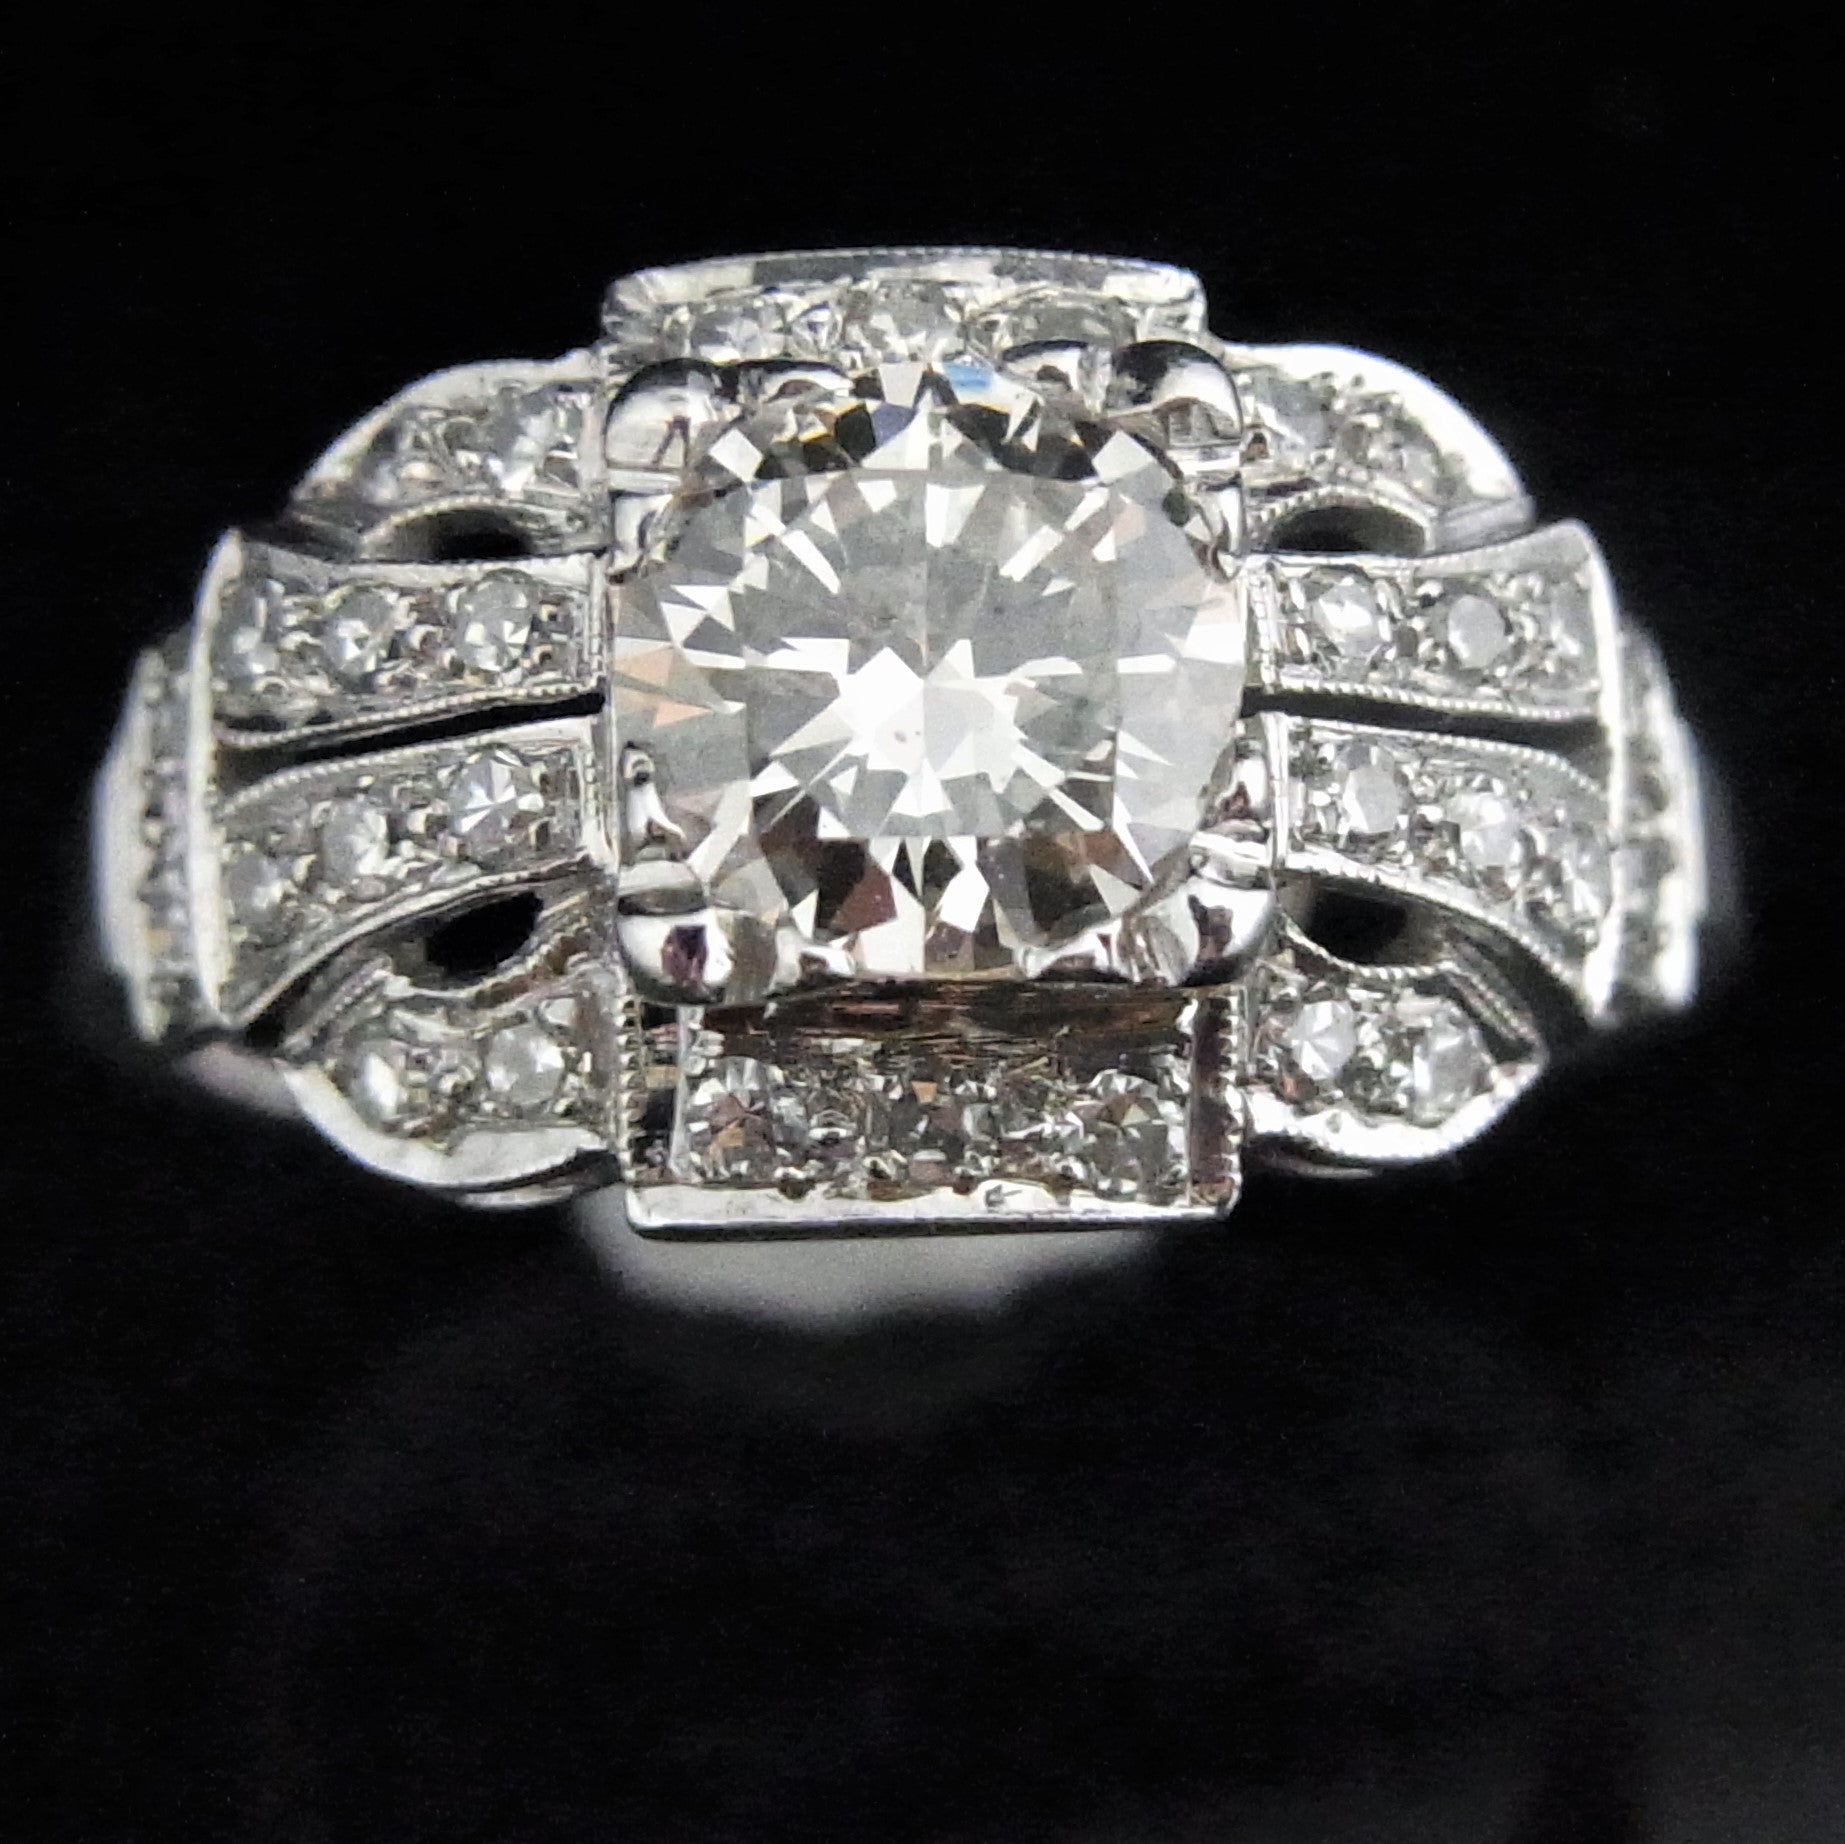 Antique Engagement Rings - www.sohojewelers.com